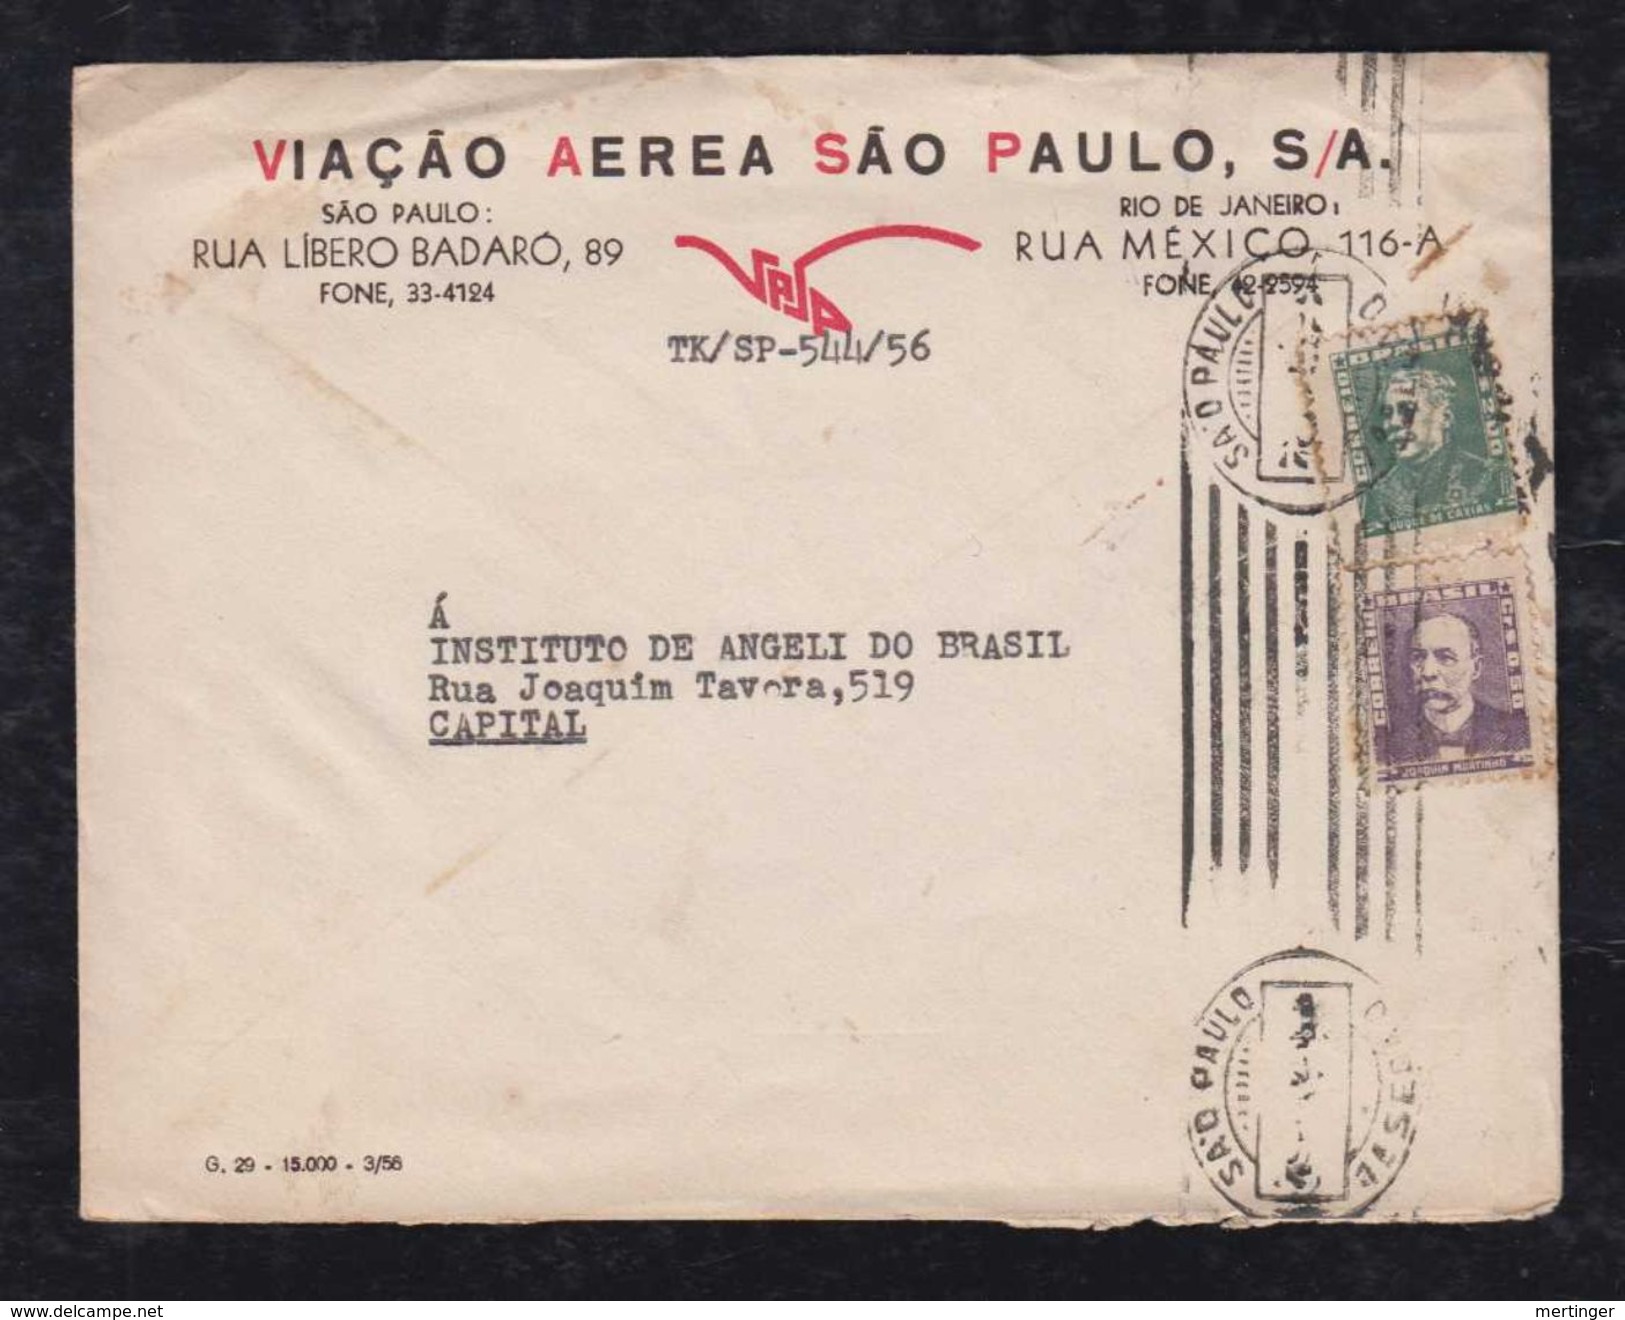 Brazil Brasil 1956 VASP Advertising Cover SAO PAULO To RIO - Airmail (Private Companies)